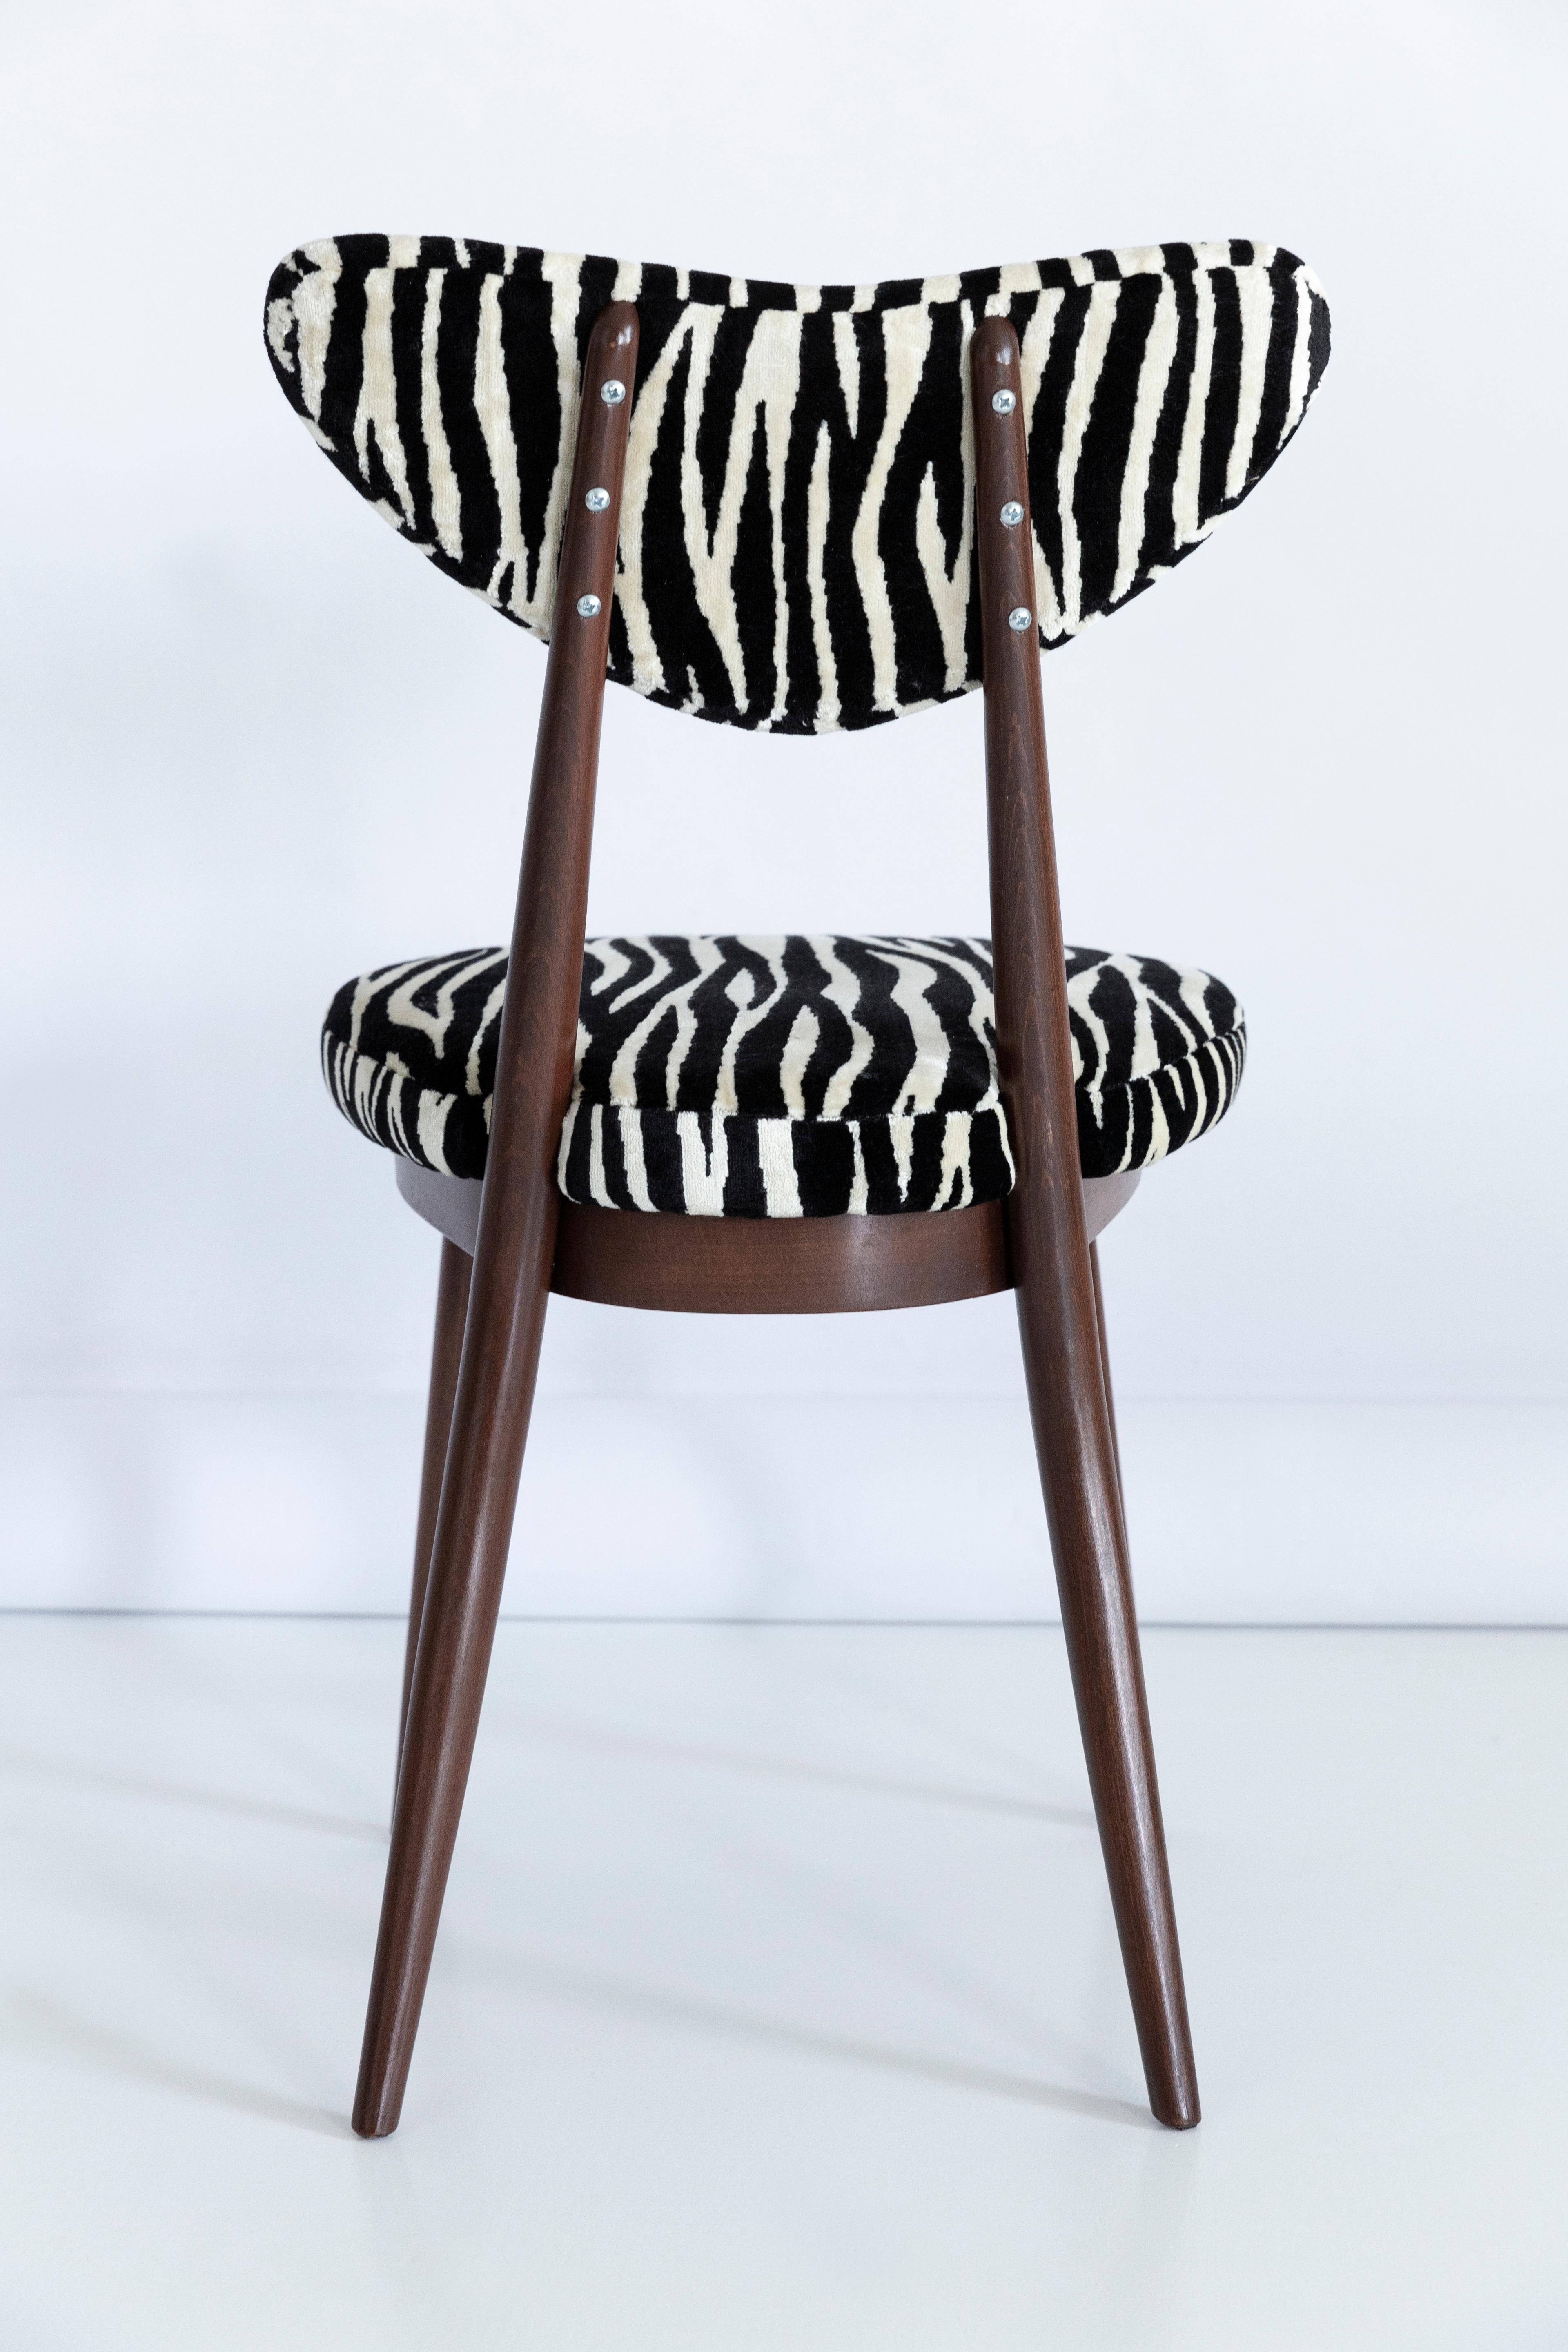 Six Midcentury Zebra Black White Heart Chairs, Hollywood Regency, Poland, 1960s For Sale 3